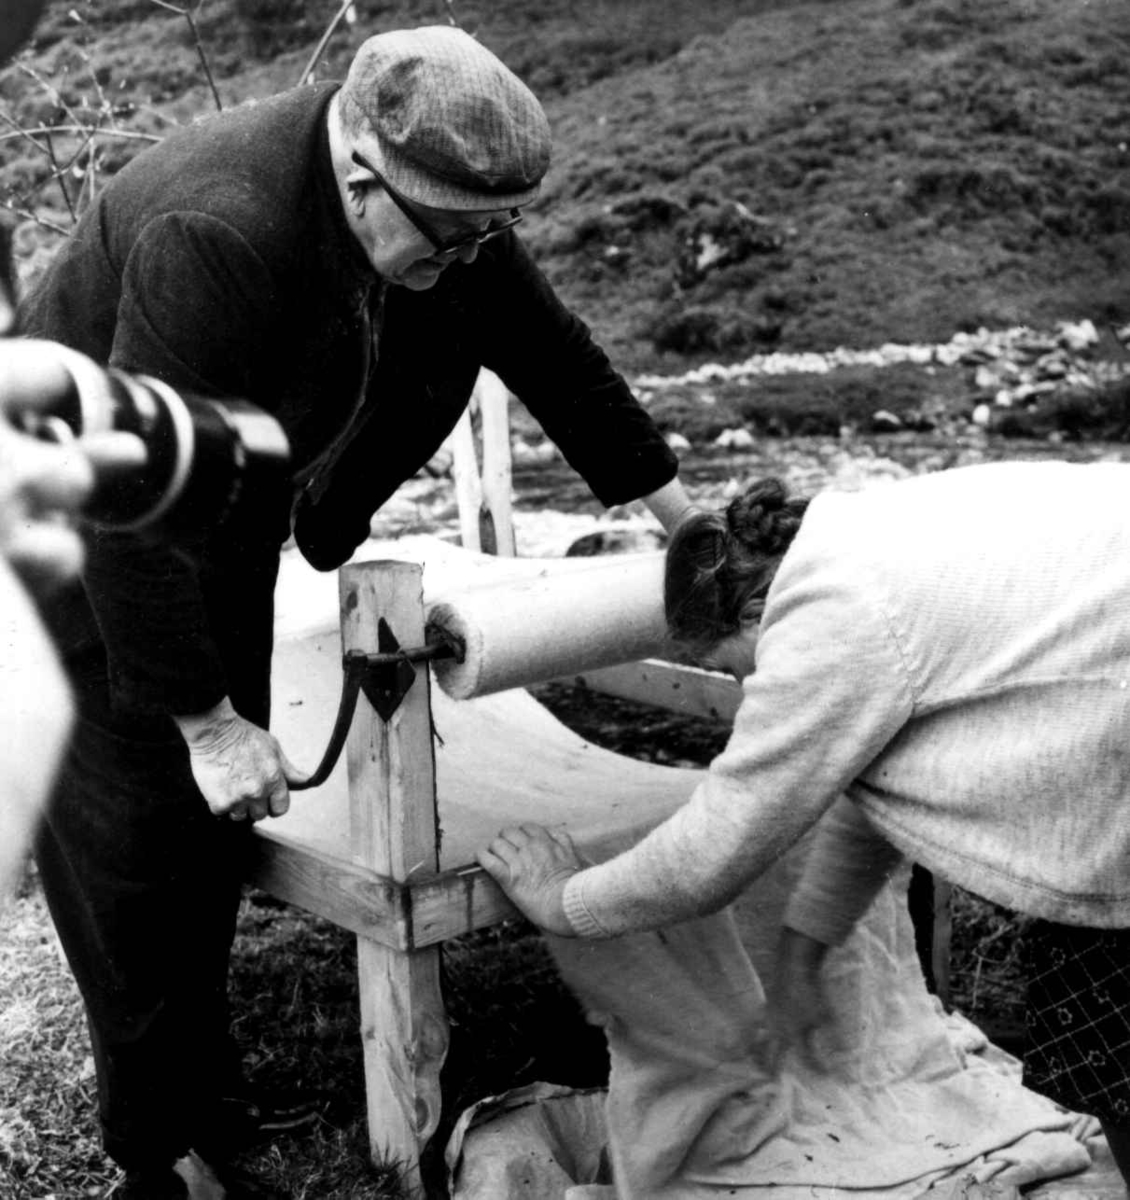 Stamping av vadmel. Serina og Ingemund Kvæstad vinder opp ferdigskylt vadmelstøy på et stativ. Kvæstad, Suldal, Rogaland 1970.